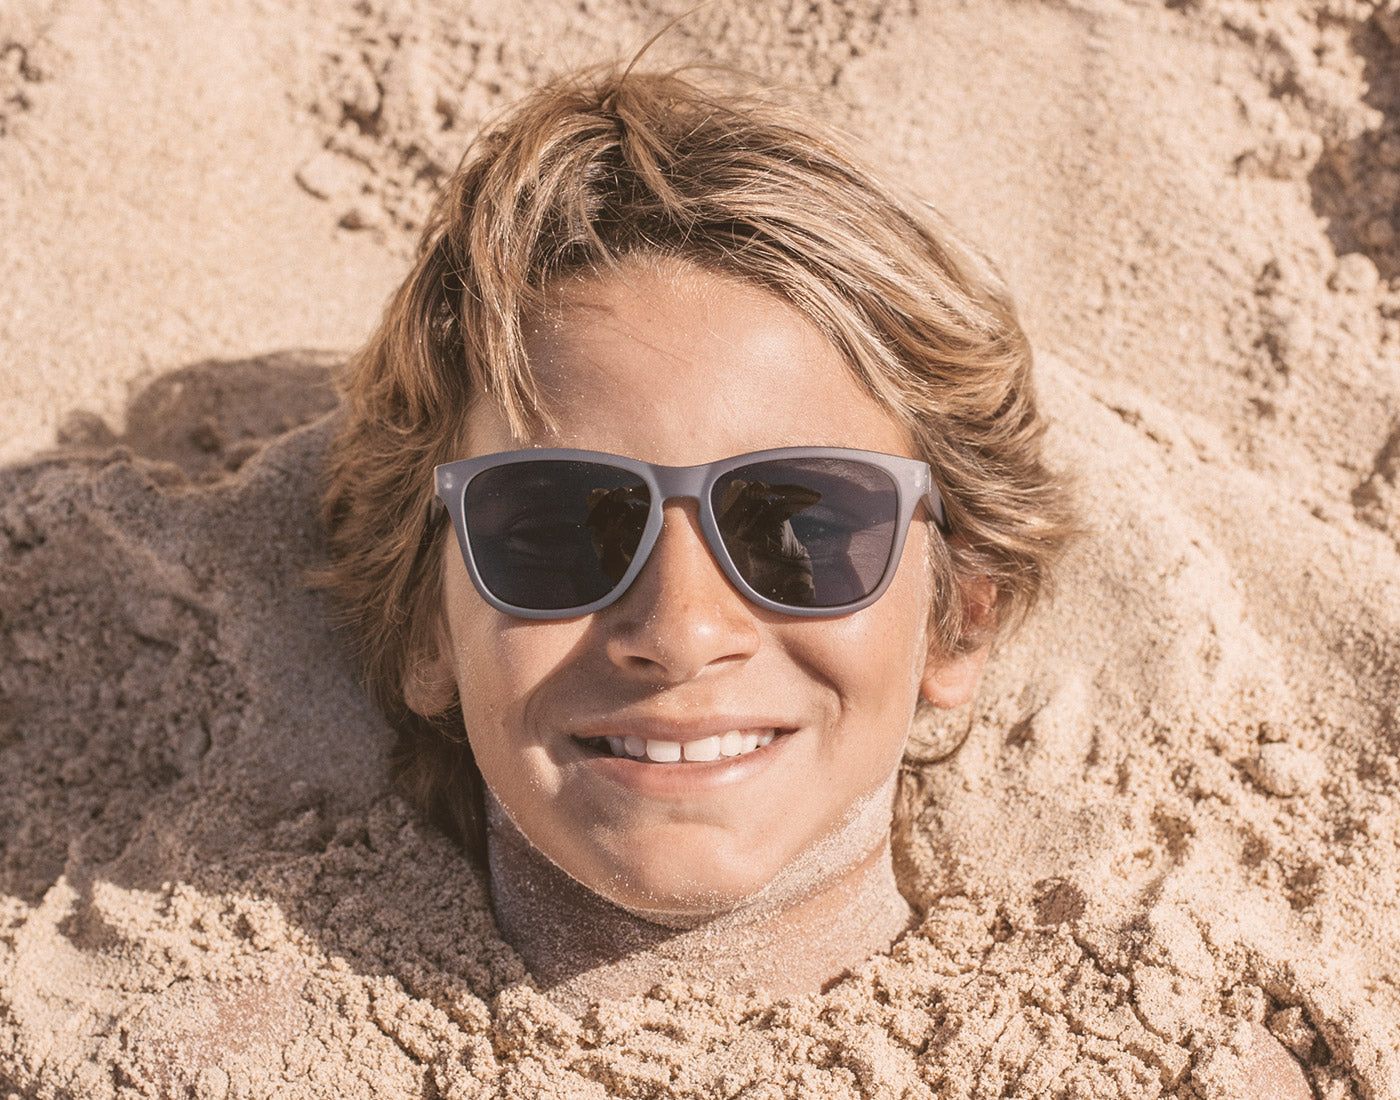 boy buried in the sand wearing sunski mini headland sunglasses